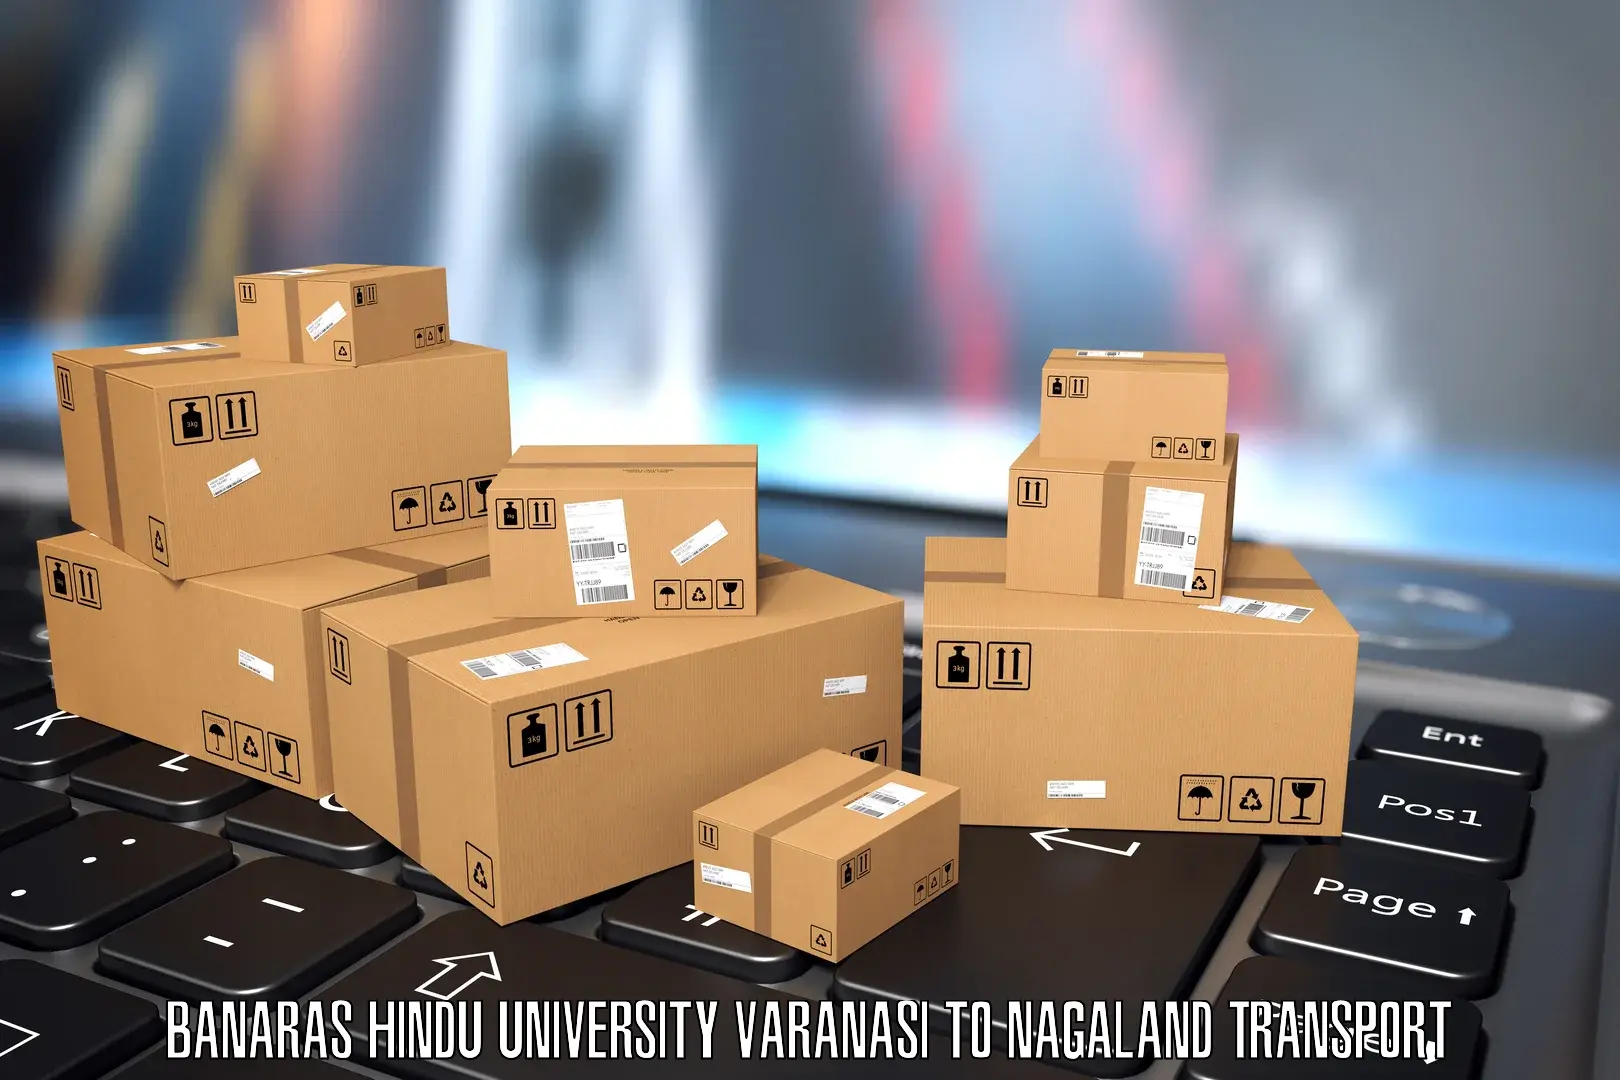 Lorry transport service Banaras Hindu University Varanasi to Dimapur